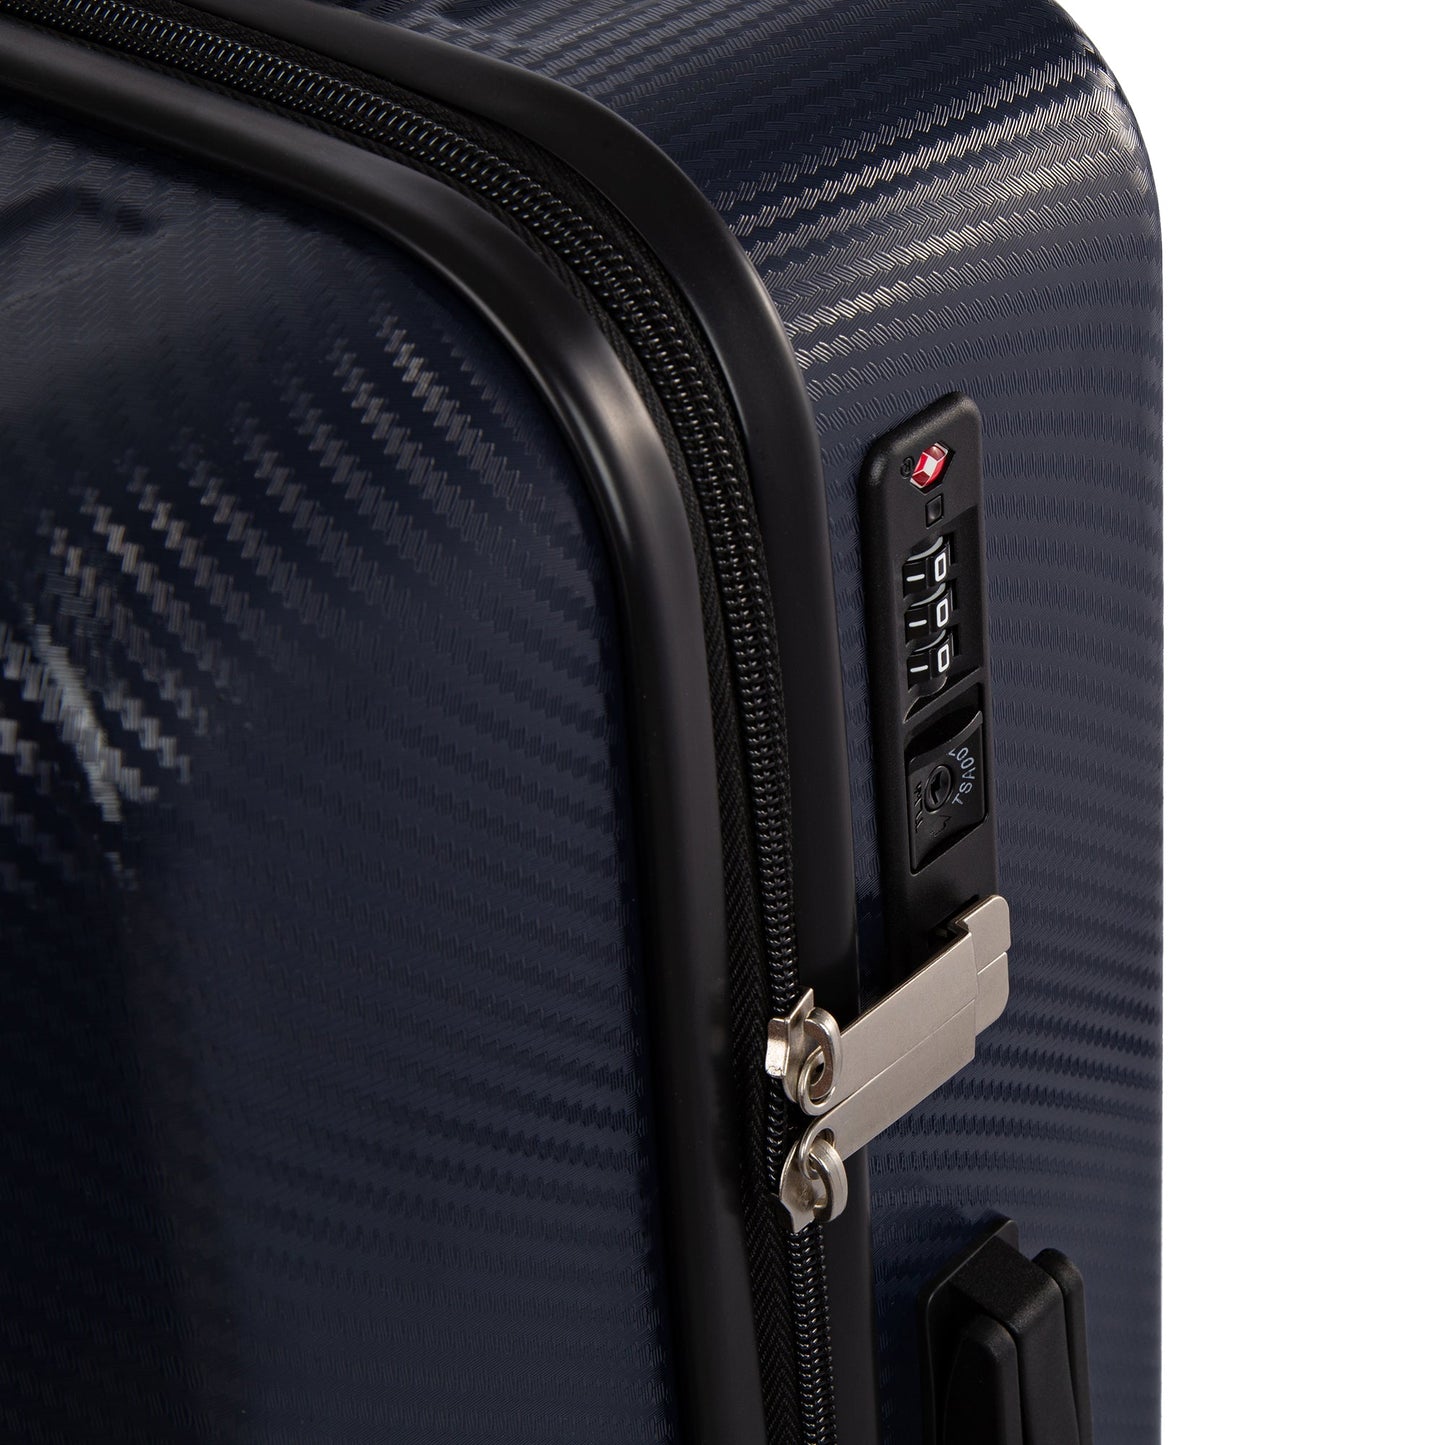 Juego de 3 maletas híbridas Terra Cabin + L + XL Azul